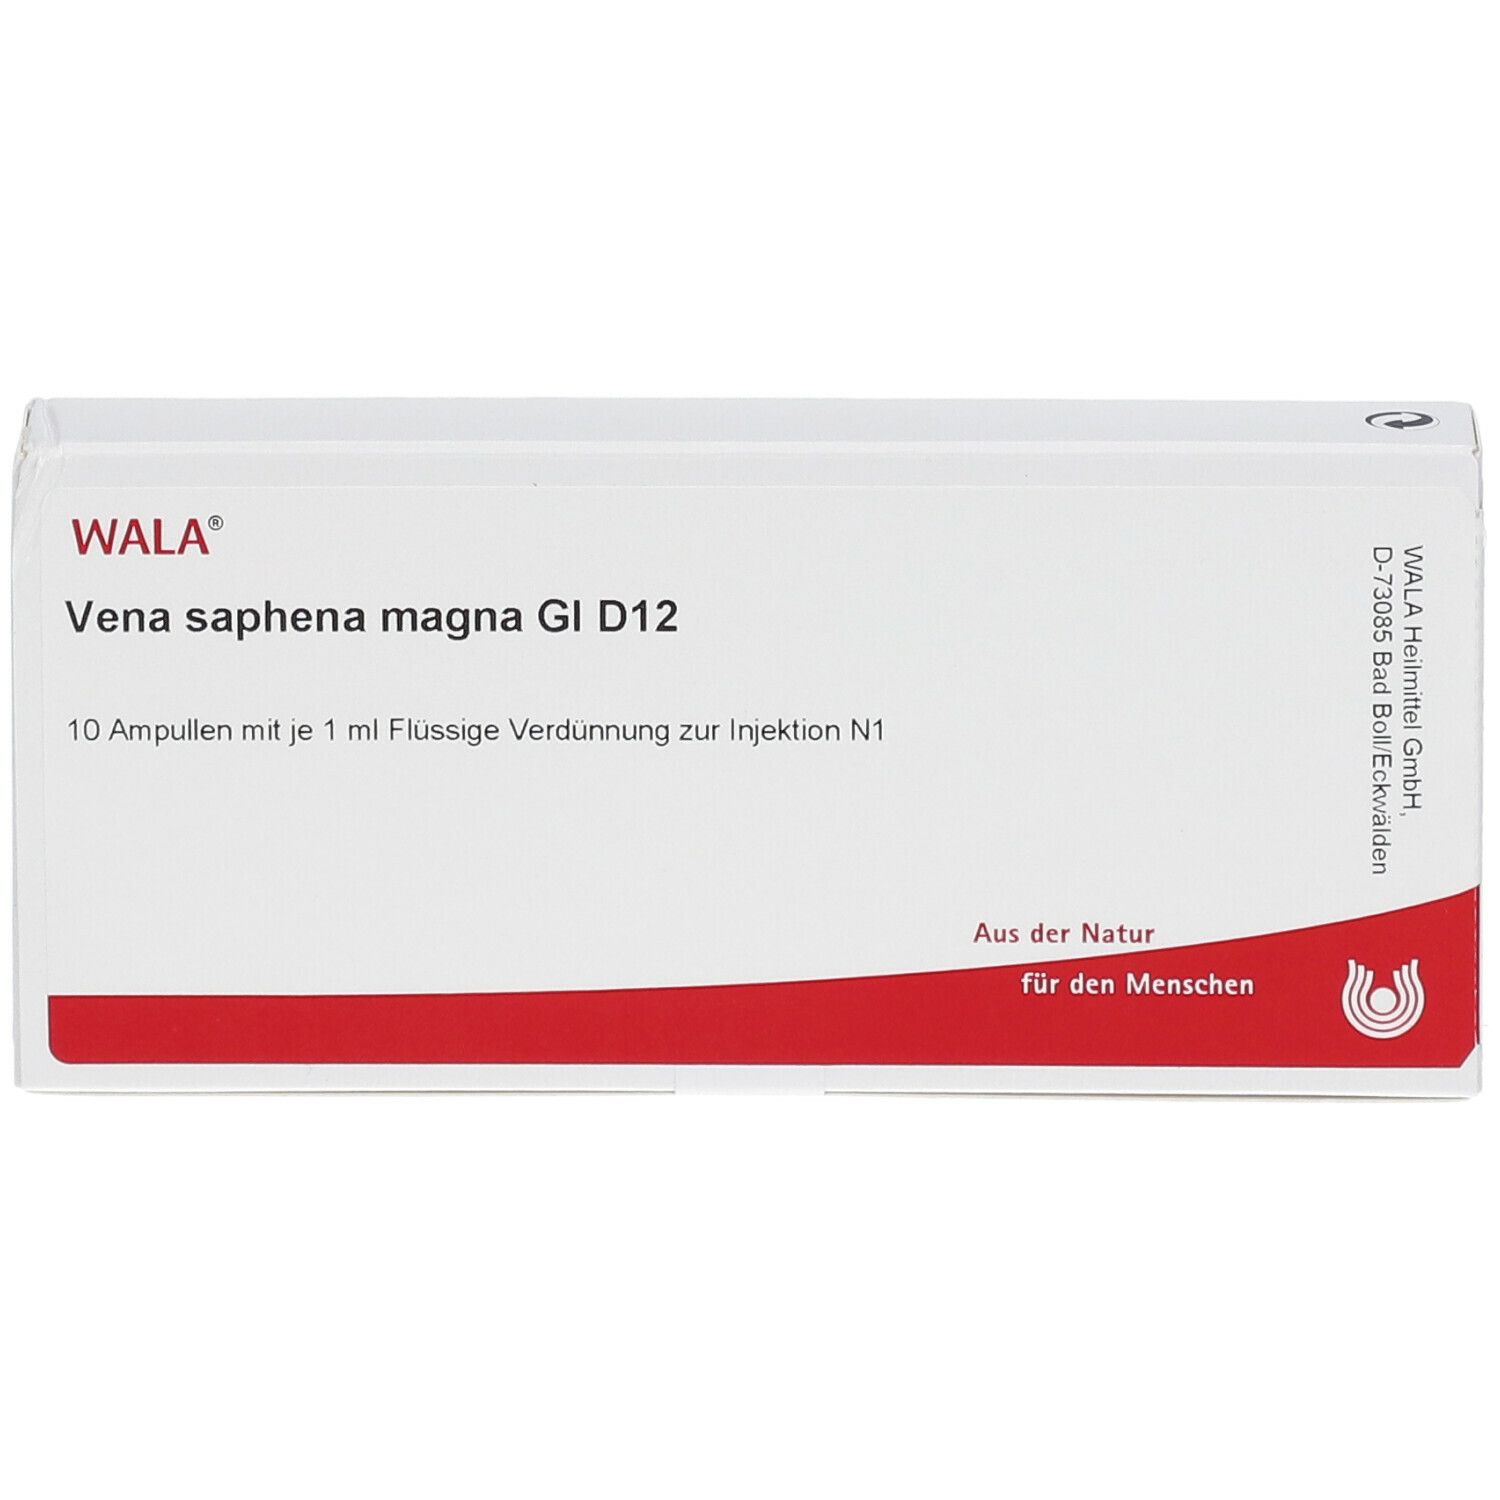 WALA® Vena saphena magna Gl D 12